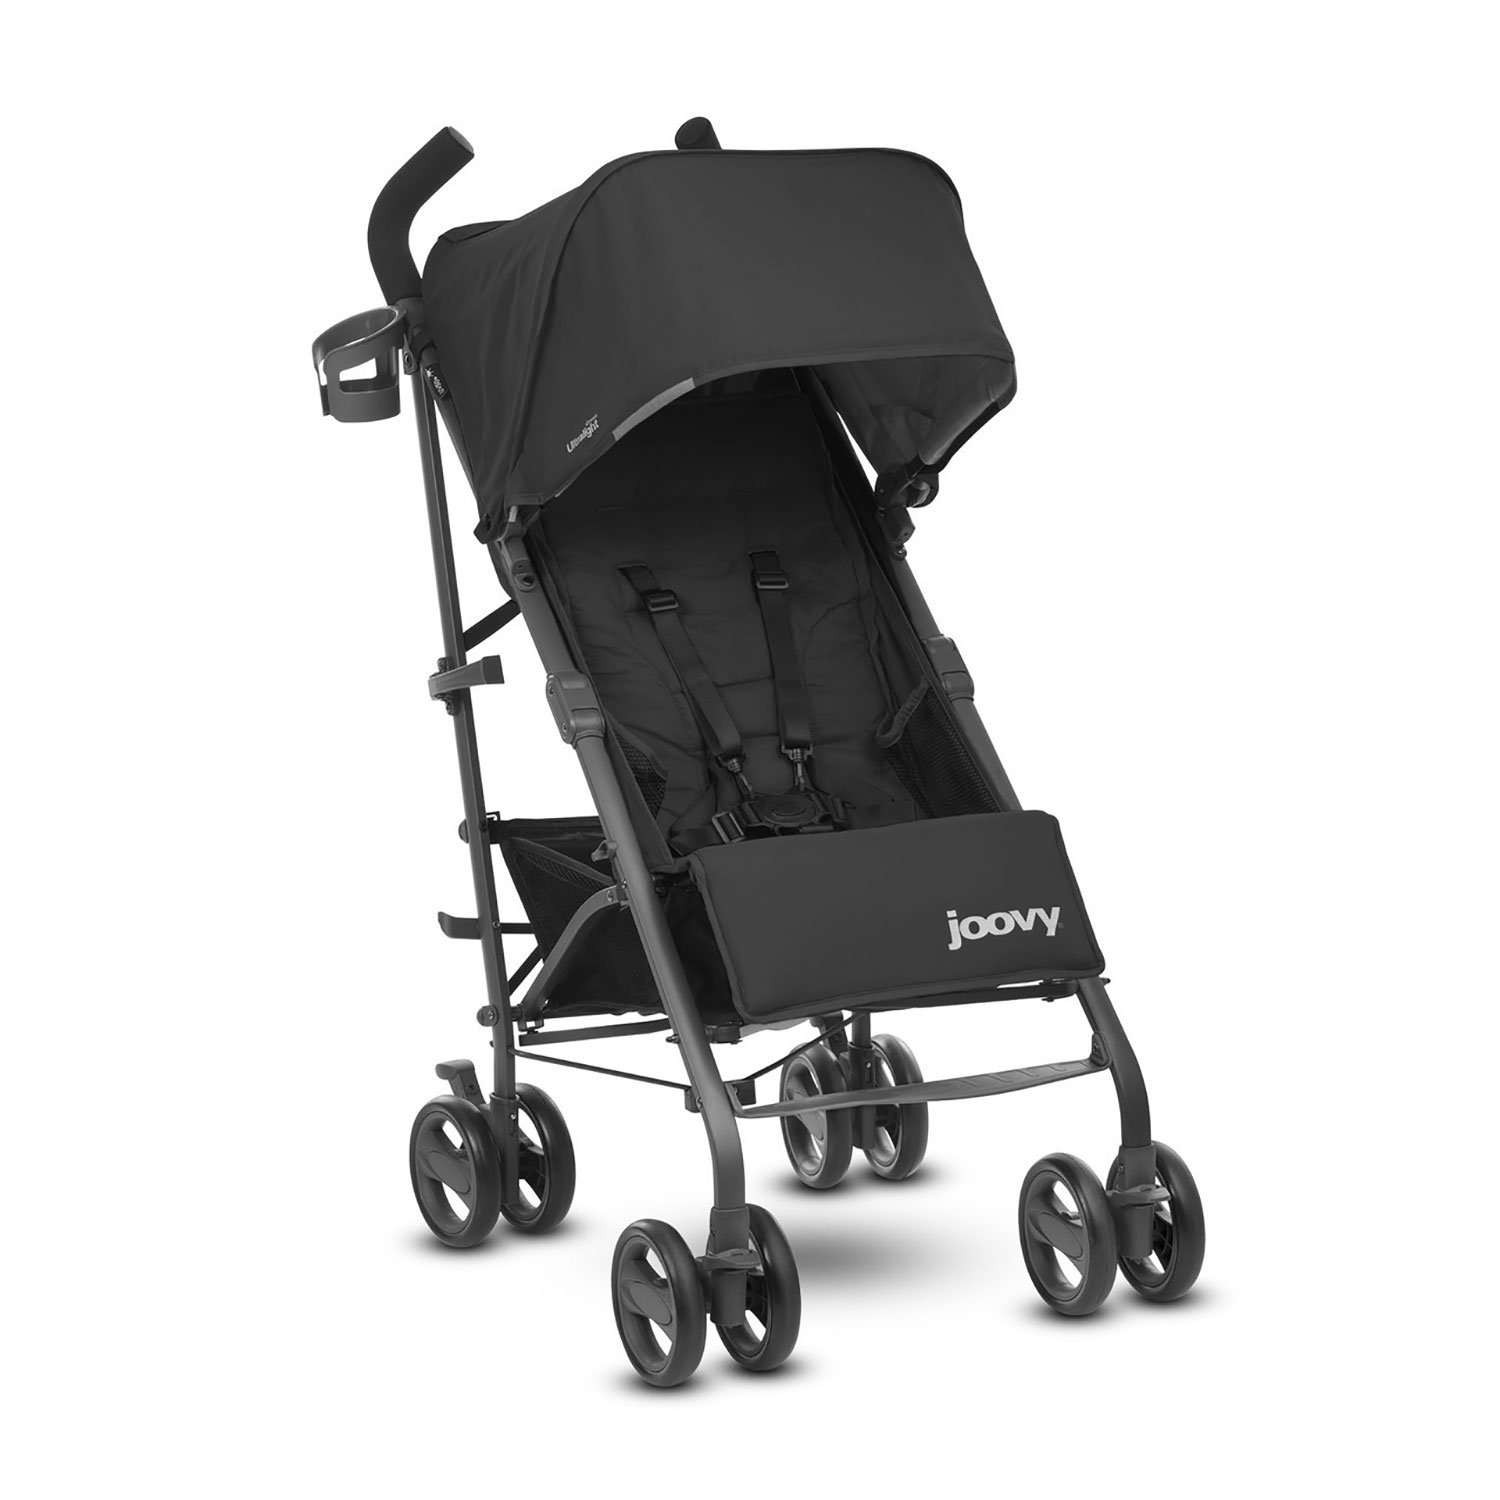 Joovy Groove Umbrella Stroller, Solid Print Black - image 1 of 6